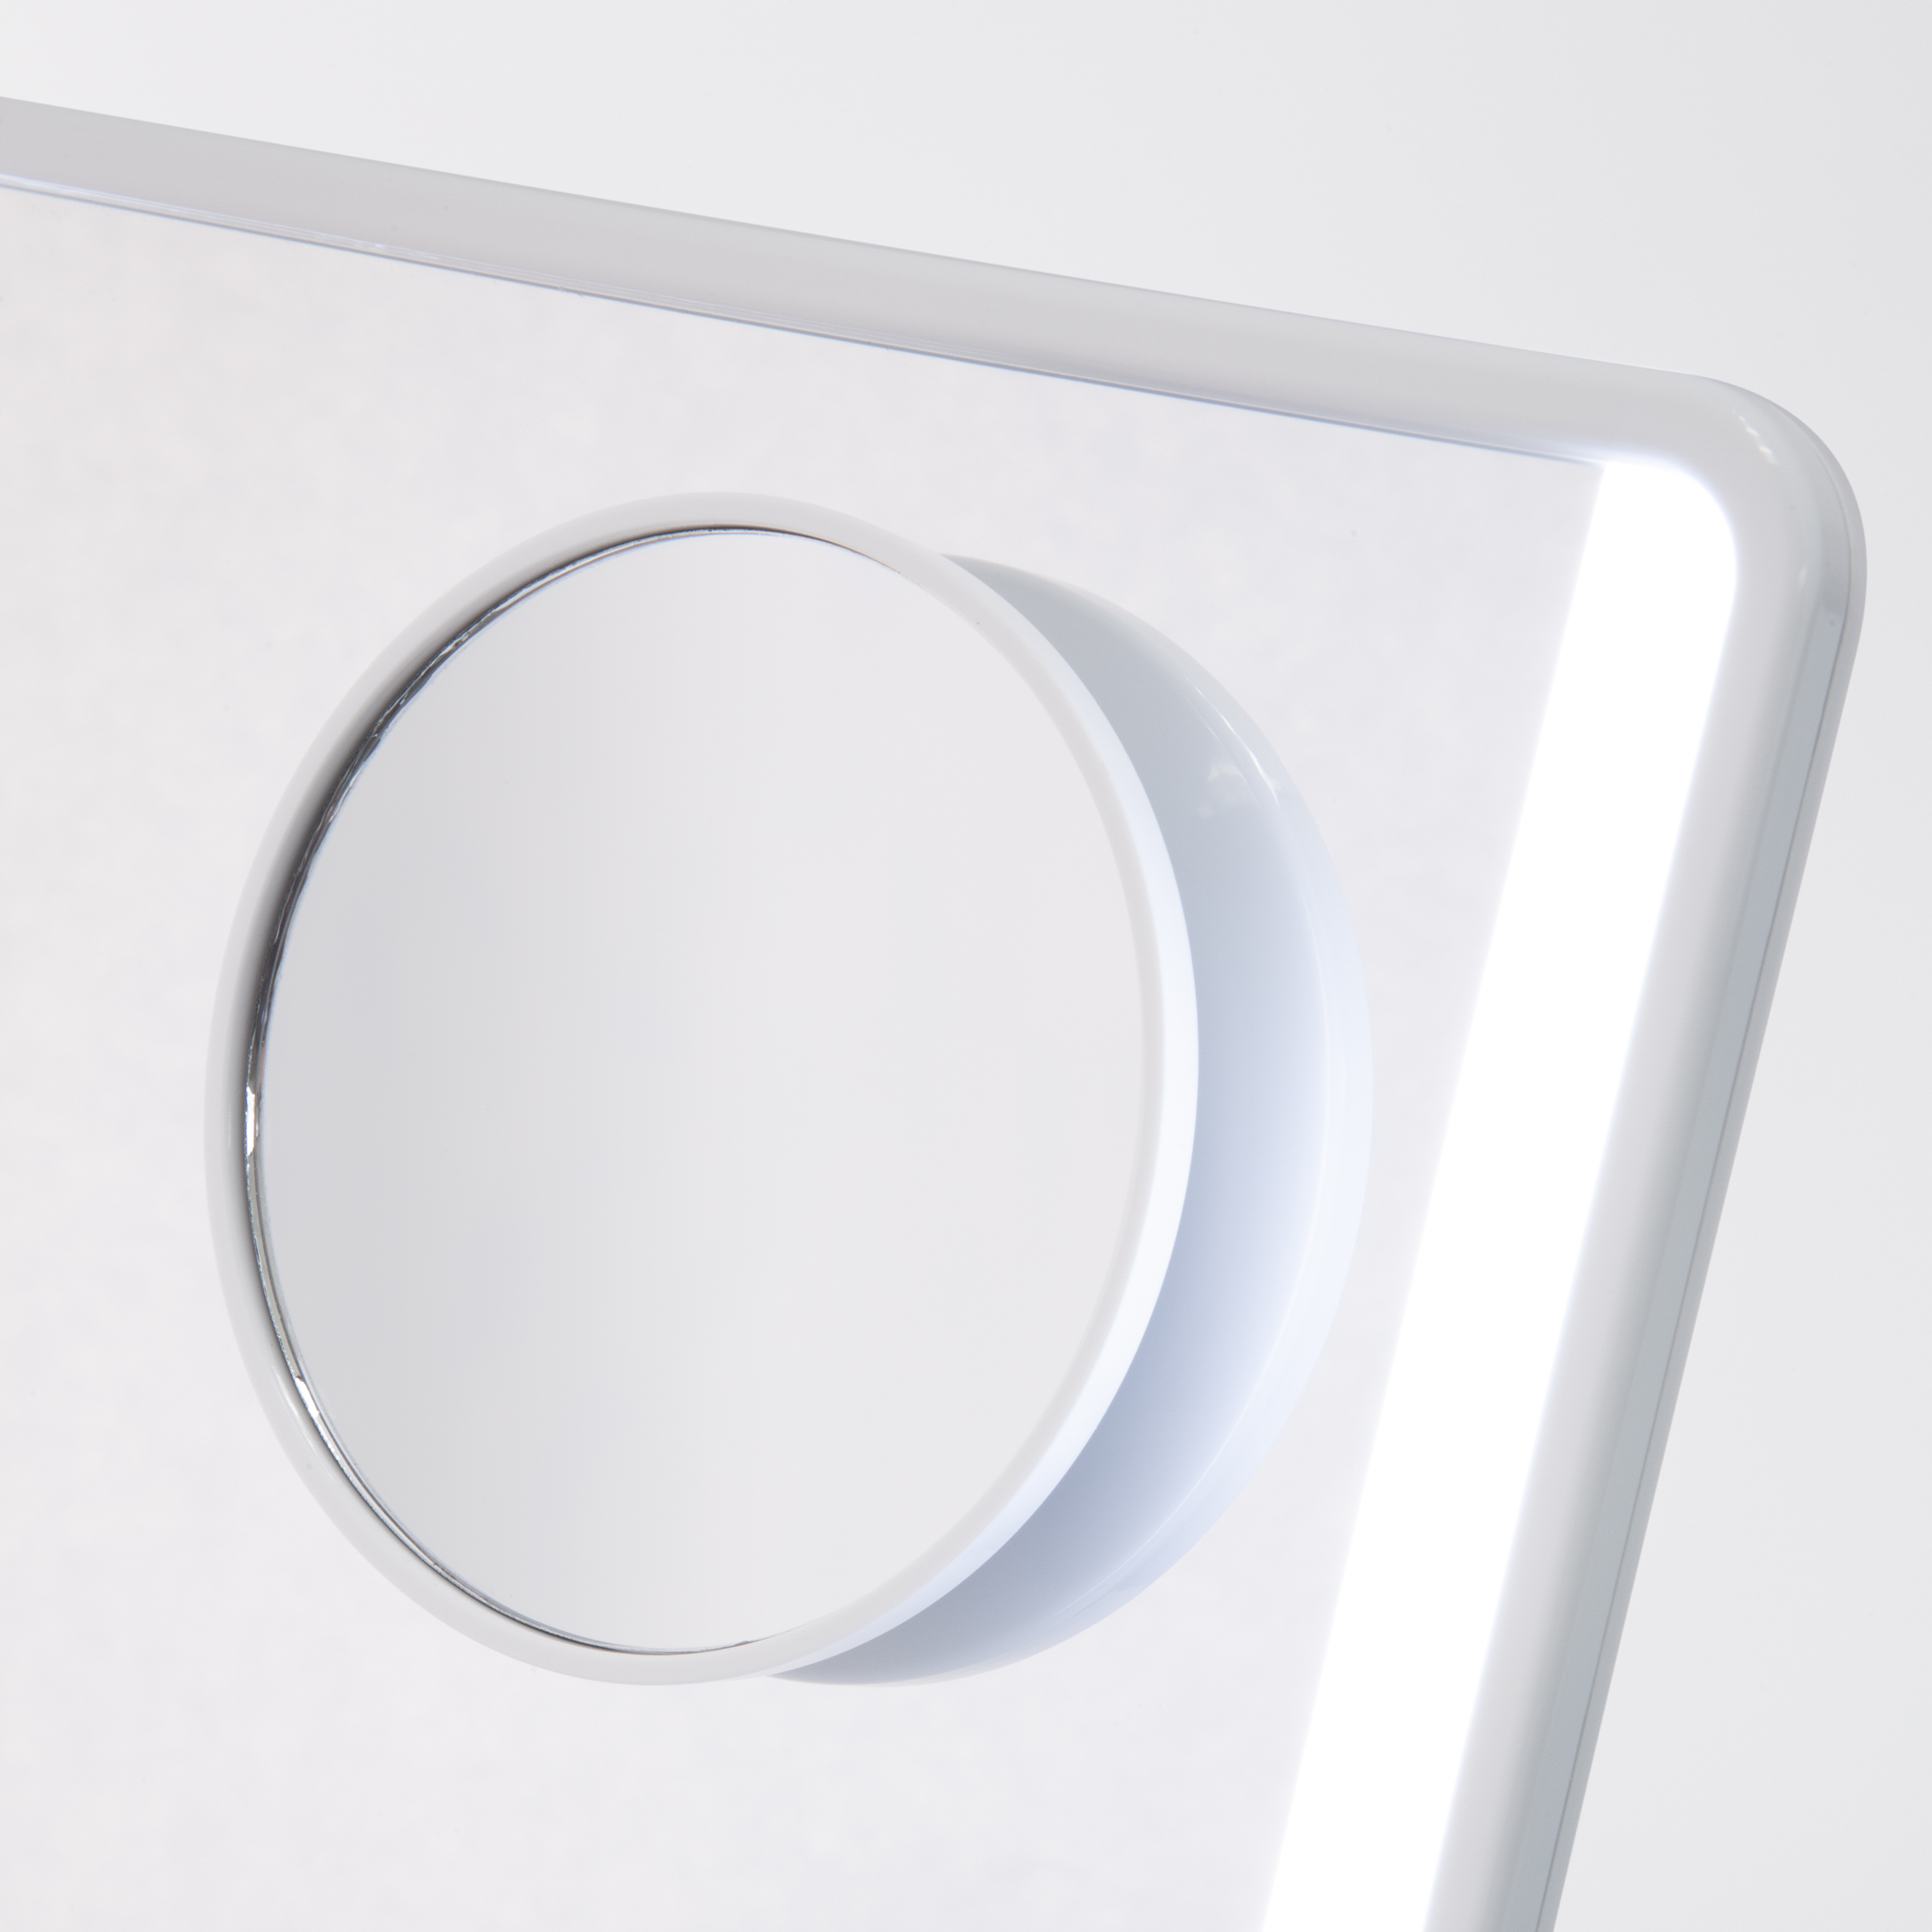 iHome Mirror with Bluetooth Audio, LED Lighting, Bonus 10x Magnification, USB Charging, 7" x 9" - image 4 of 12